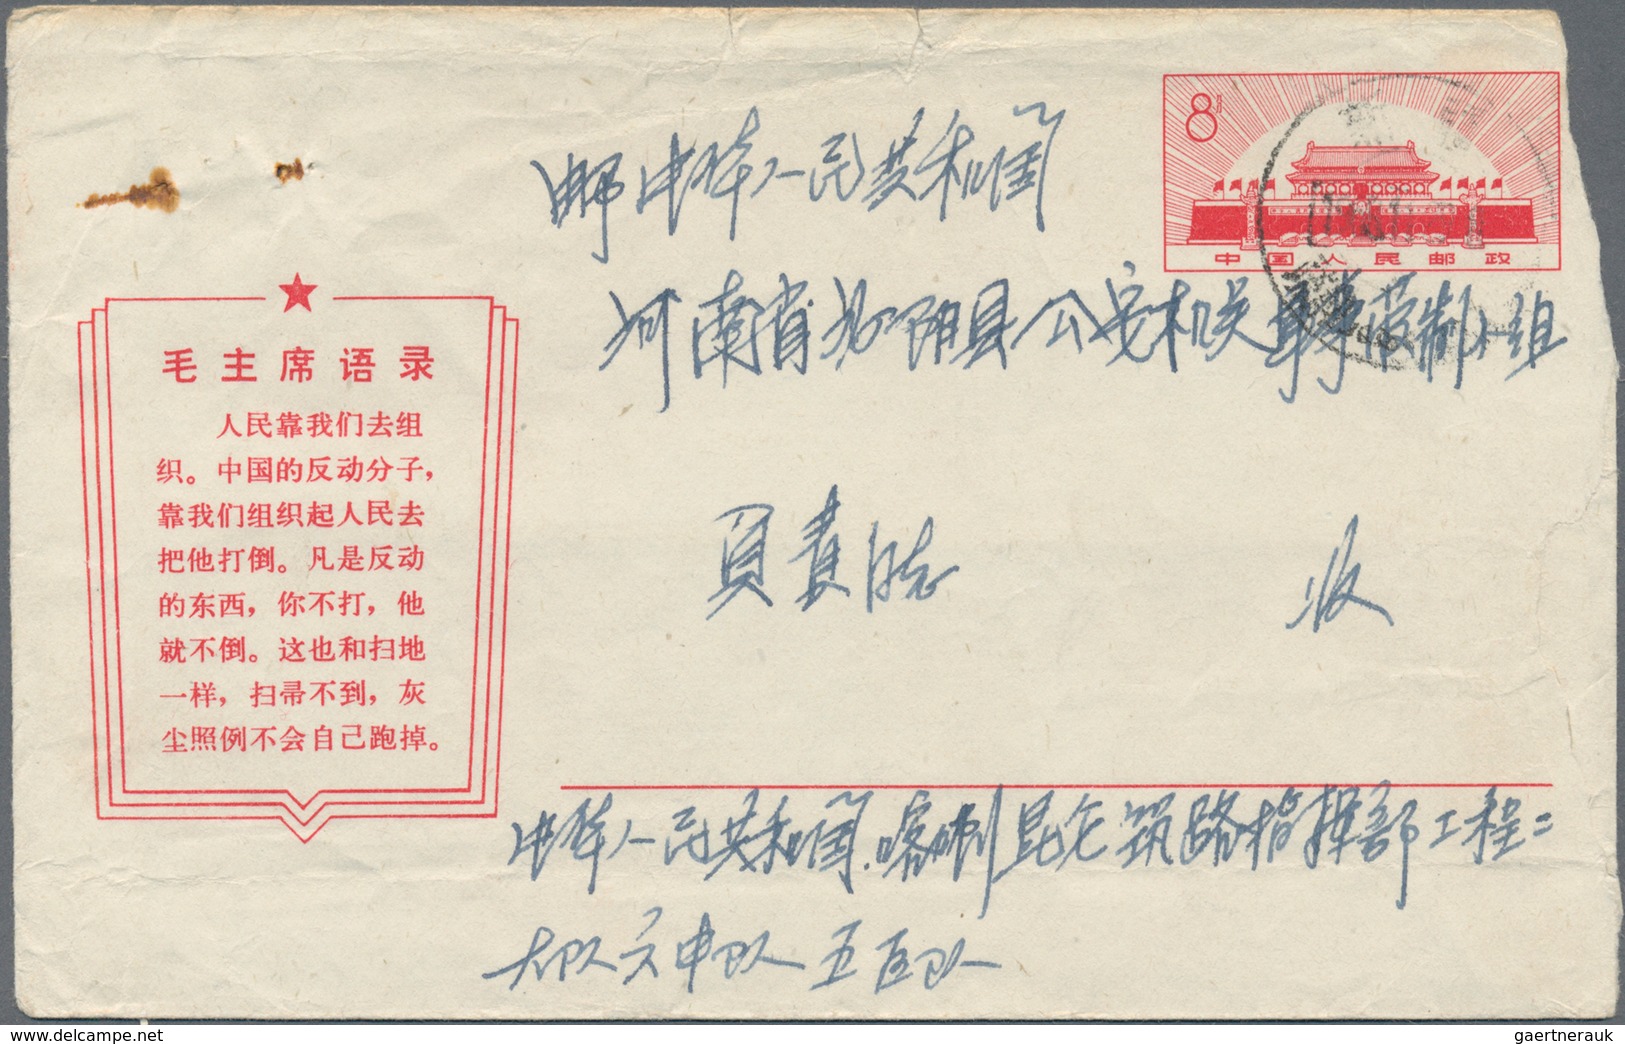 China - Volksrepublik - Ganzsachen: 1967, Cultural Revolution Envelope 8 F. (15-1967) Canc. "Sinkian - Cartes Postales